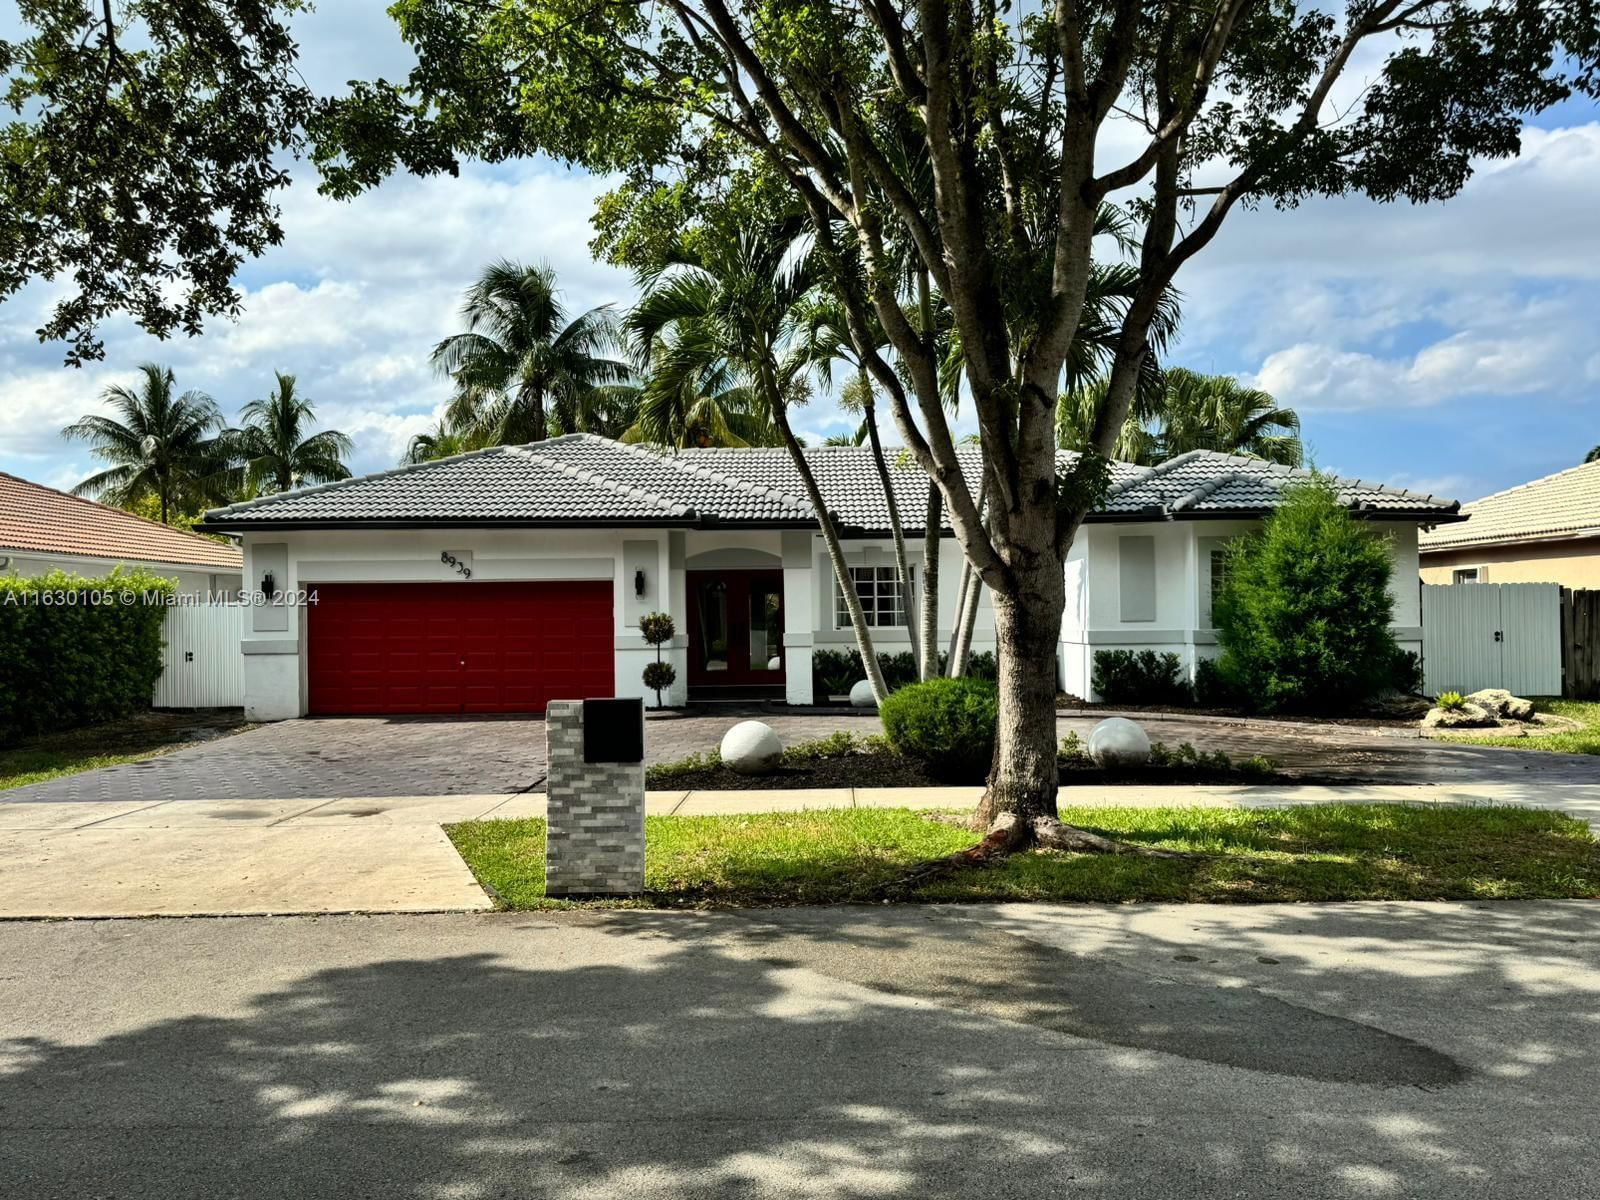 Real estate property located at 8939 165th Ter, Miami-Dade County, ROYAL GARDEN ESTATES, Miami Lakes, FL